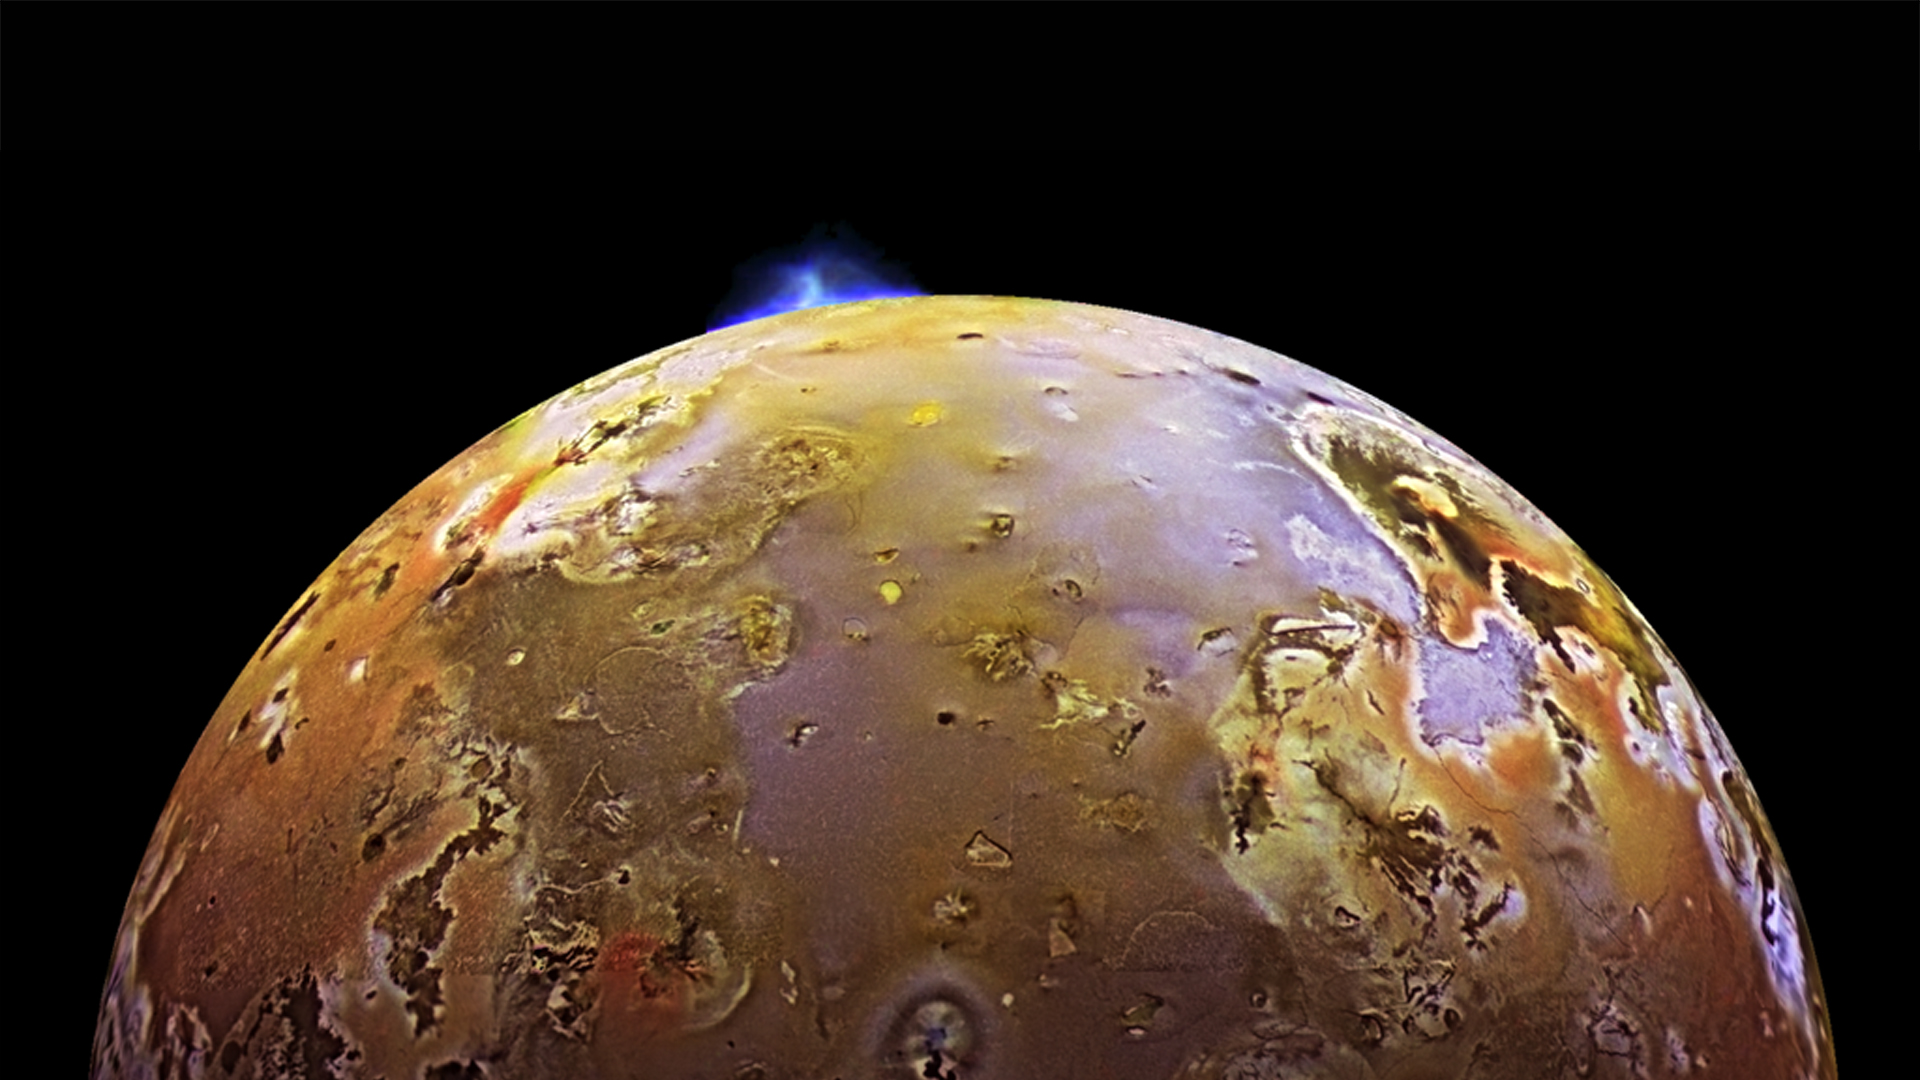 Image of a volcanic eruption on Jupiter's moon Io.